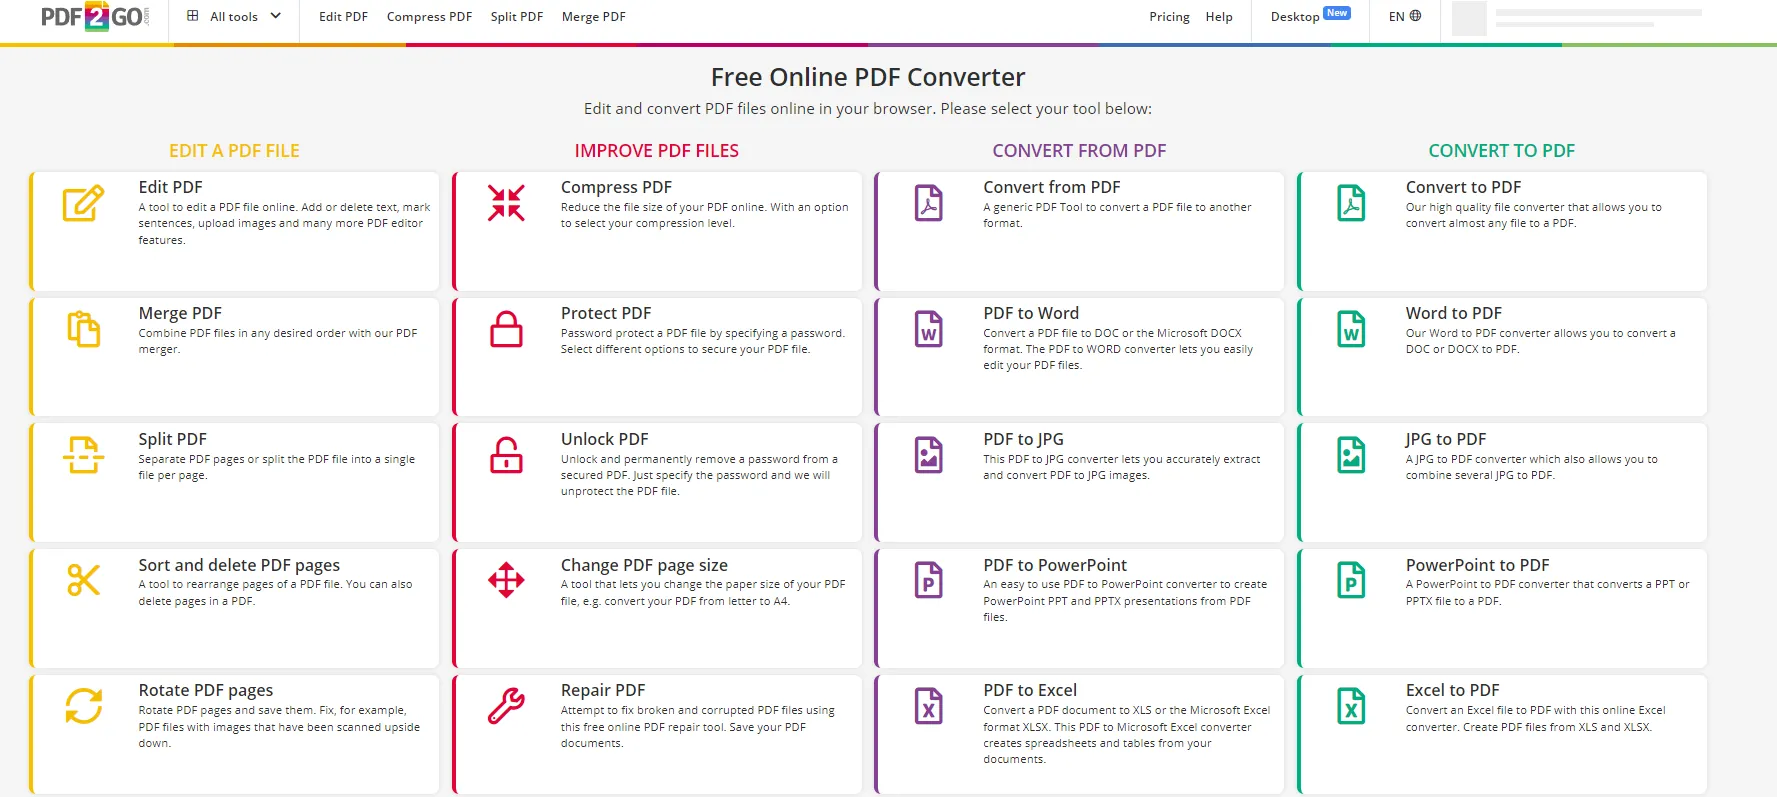 pdf to text converter online pdf2go